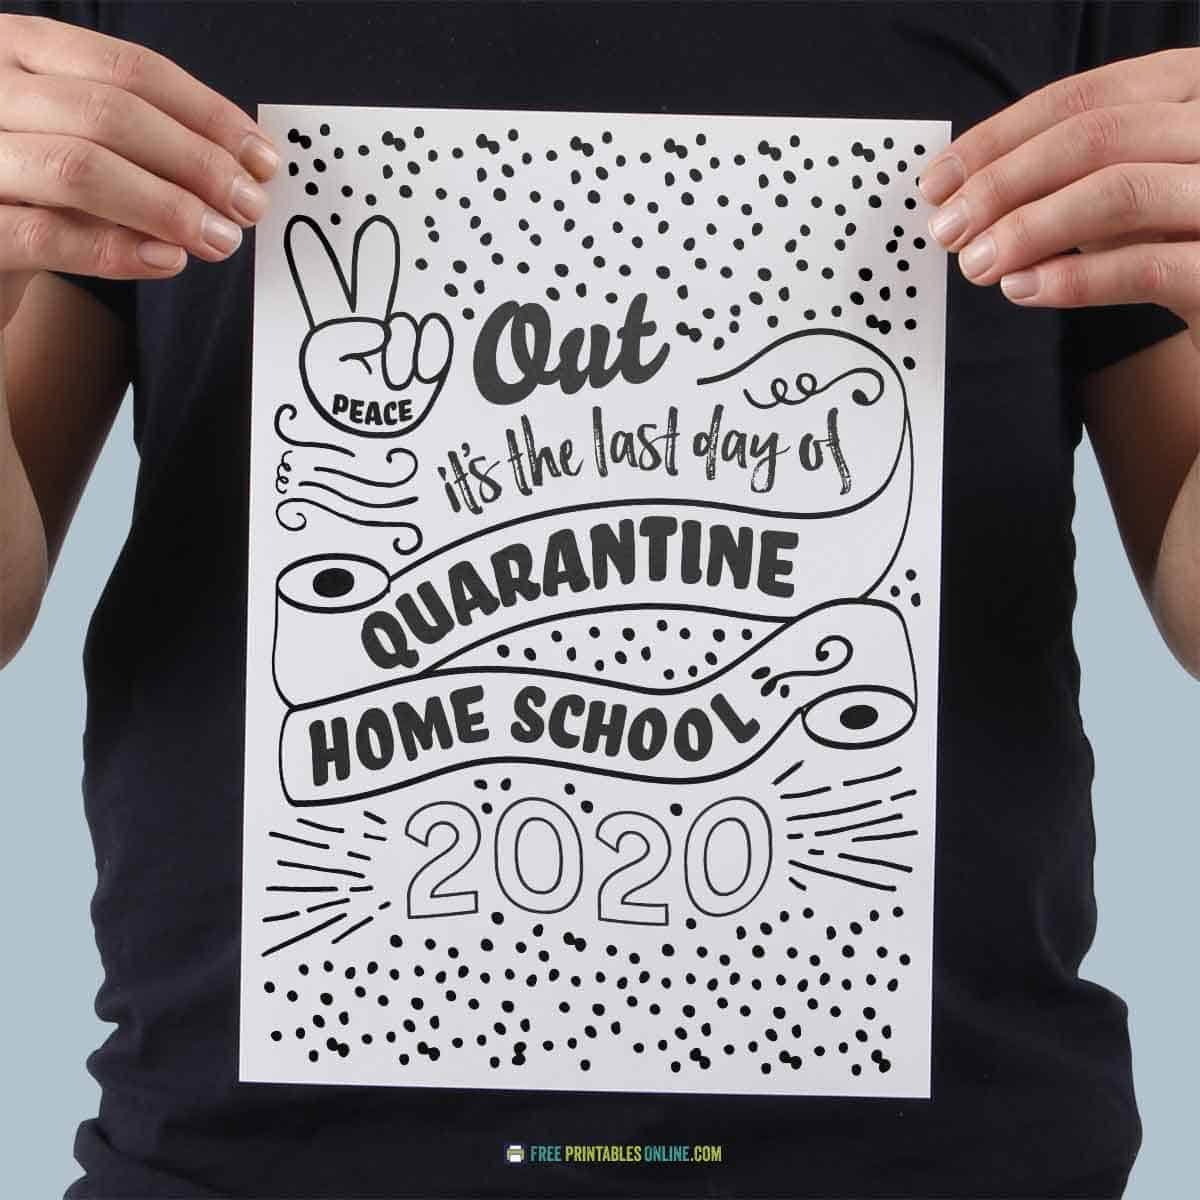 Last day of school quarantine sign - Free Printables Online